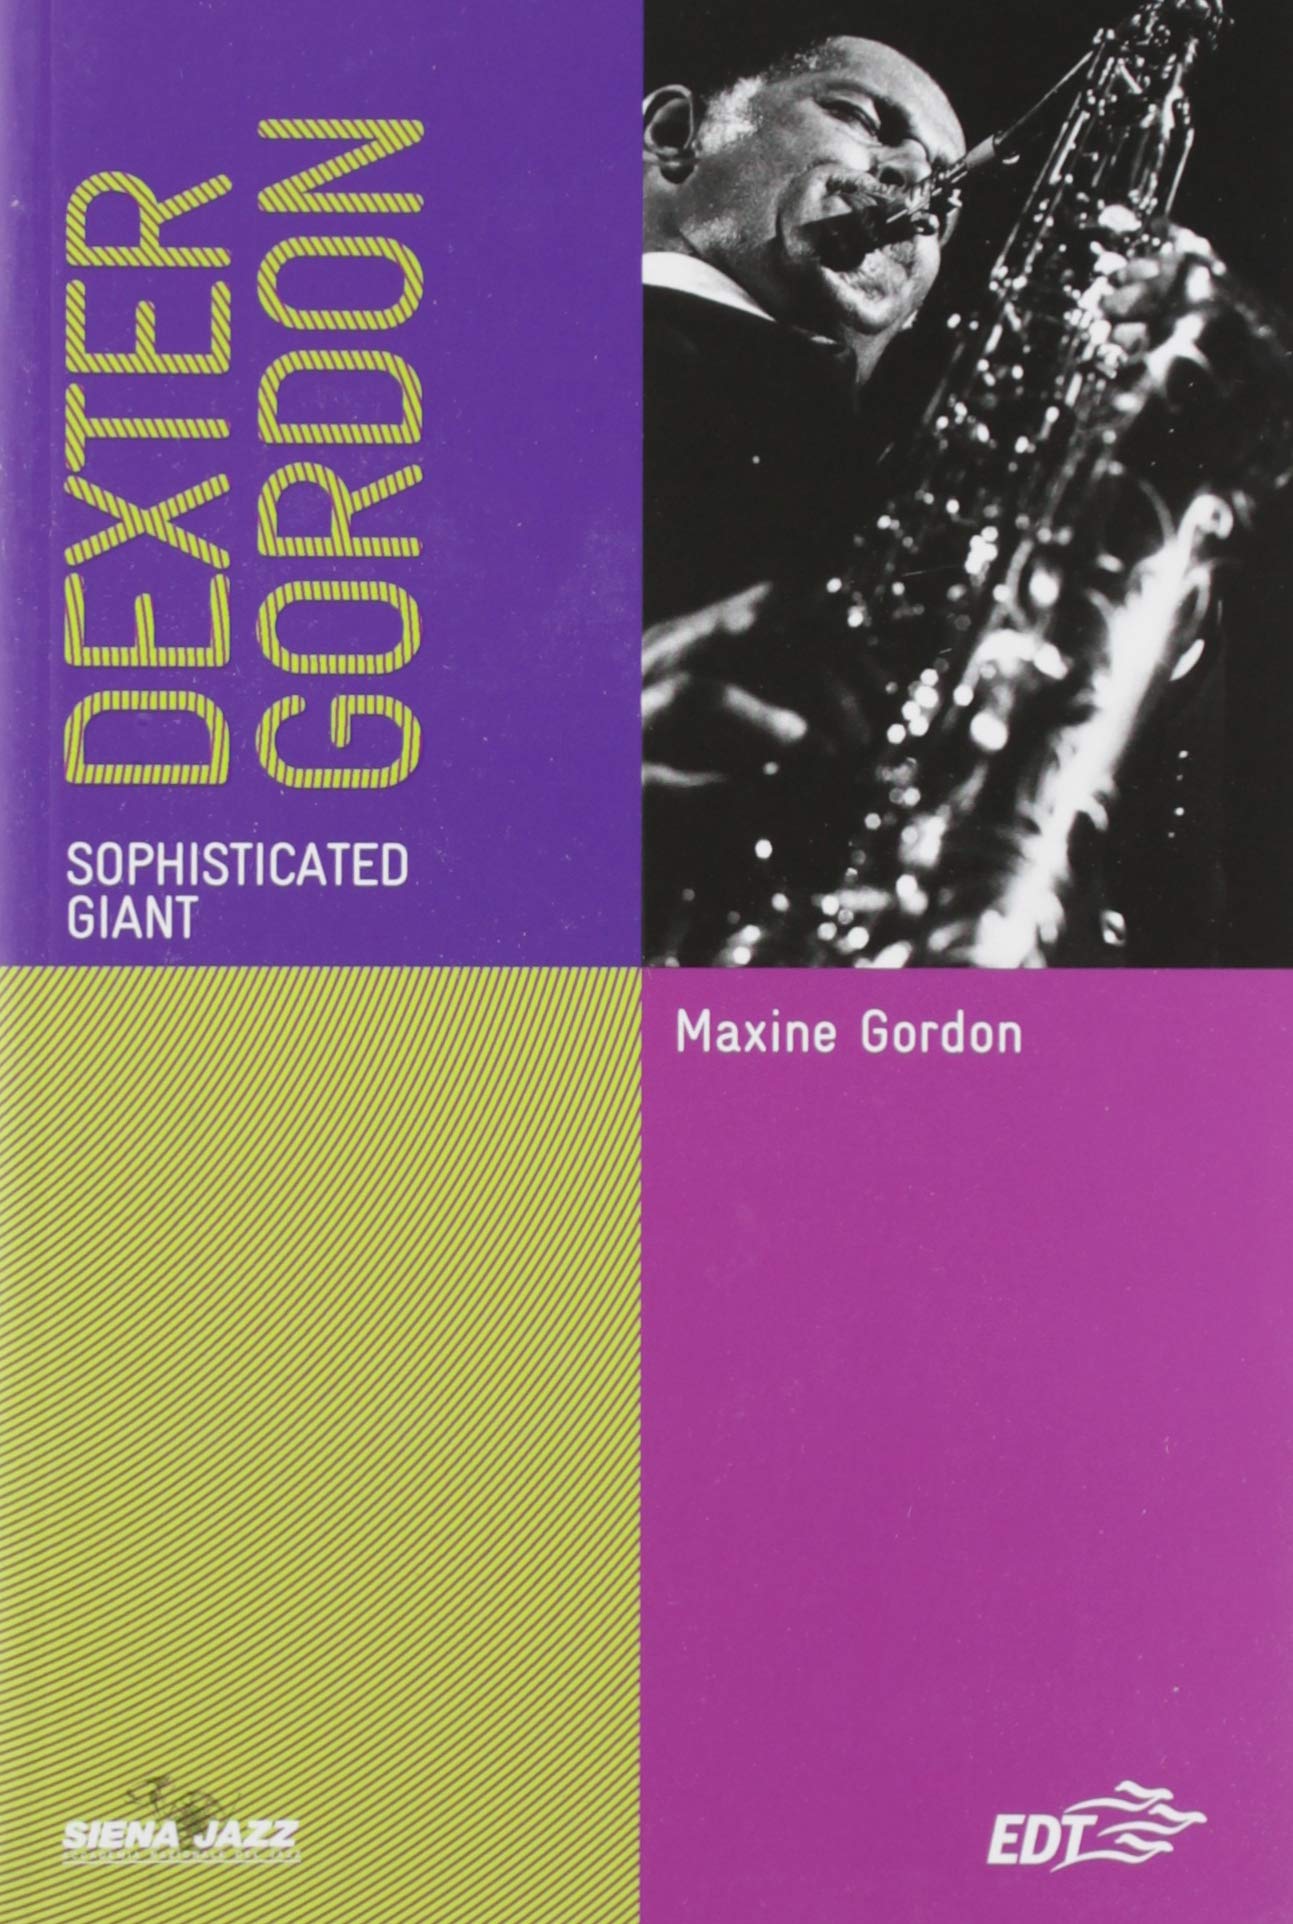 Dexter Gordon - biografia - EDT